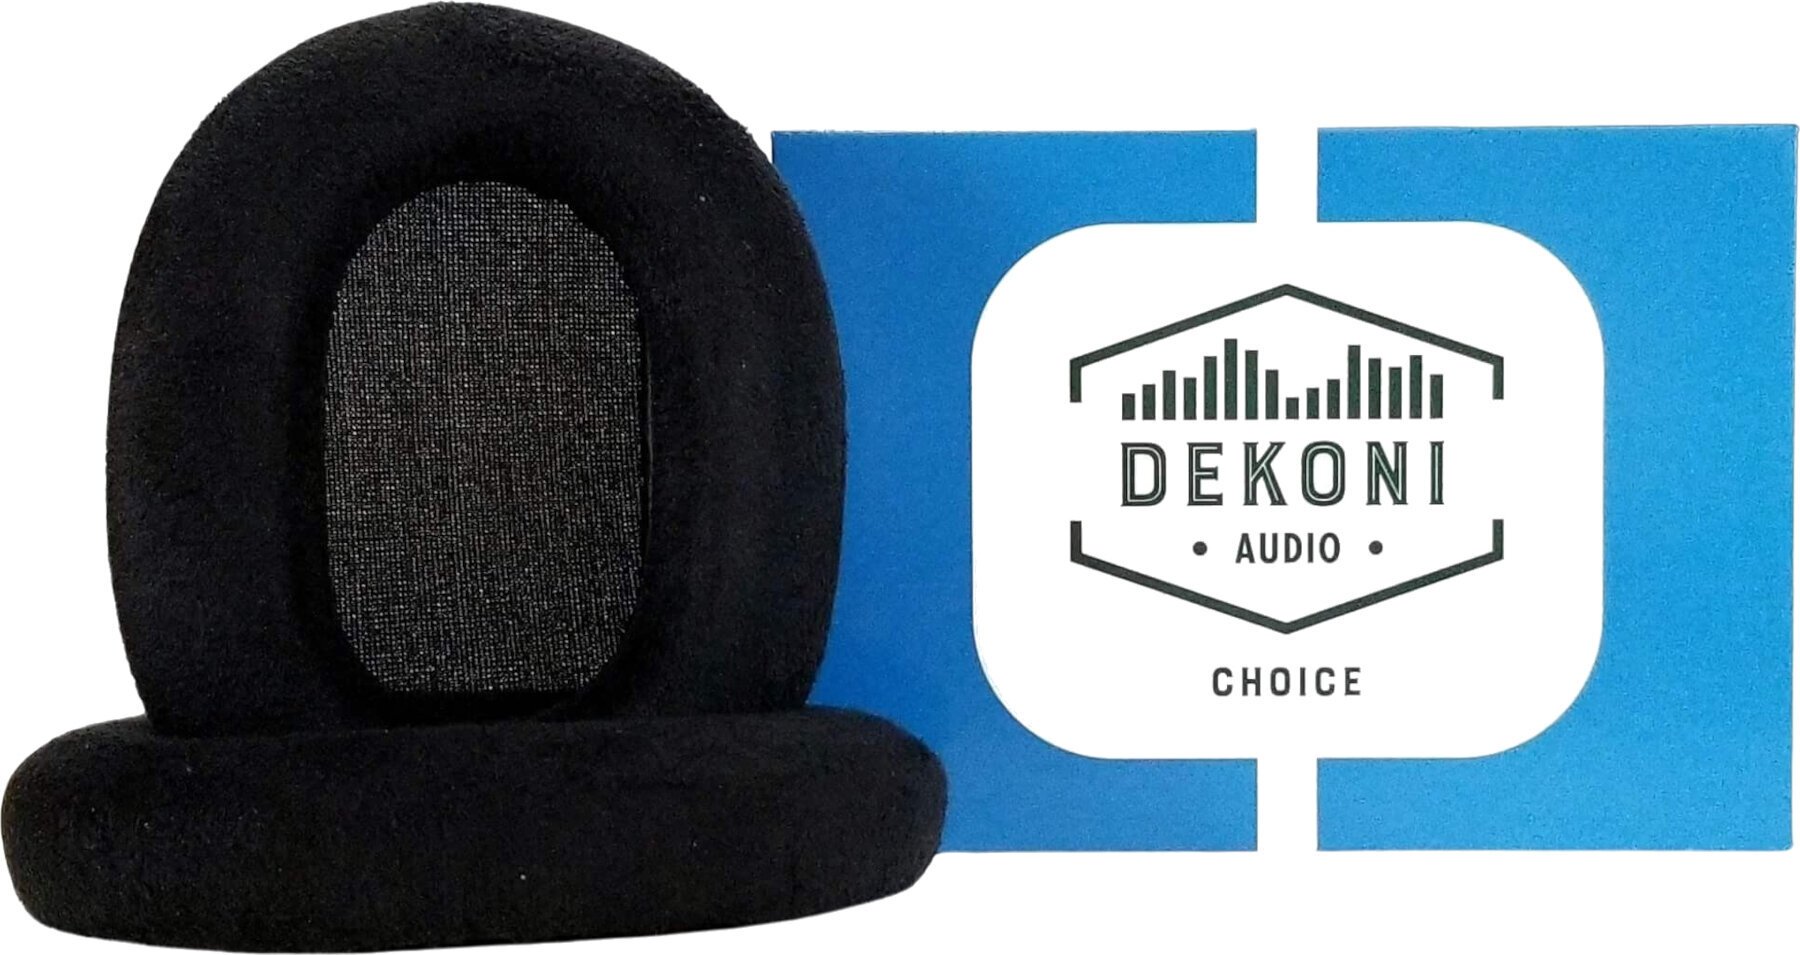 Ohrpolster für Kopfhörer Dekoni Audio EPZ-XM5-CHS Ohrpolster für Kopfhörer Schwarz